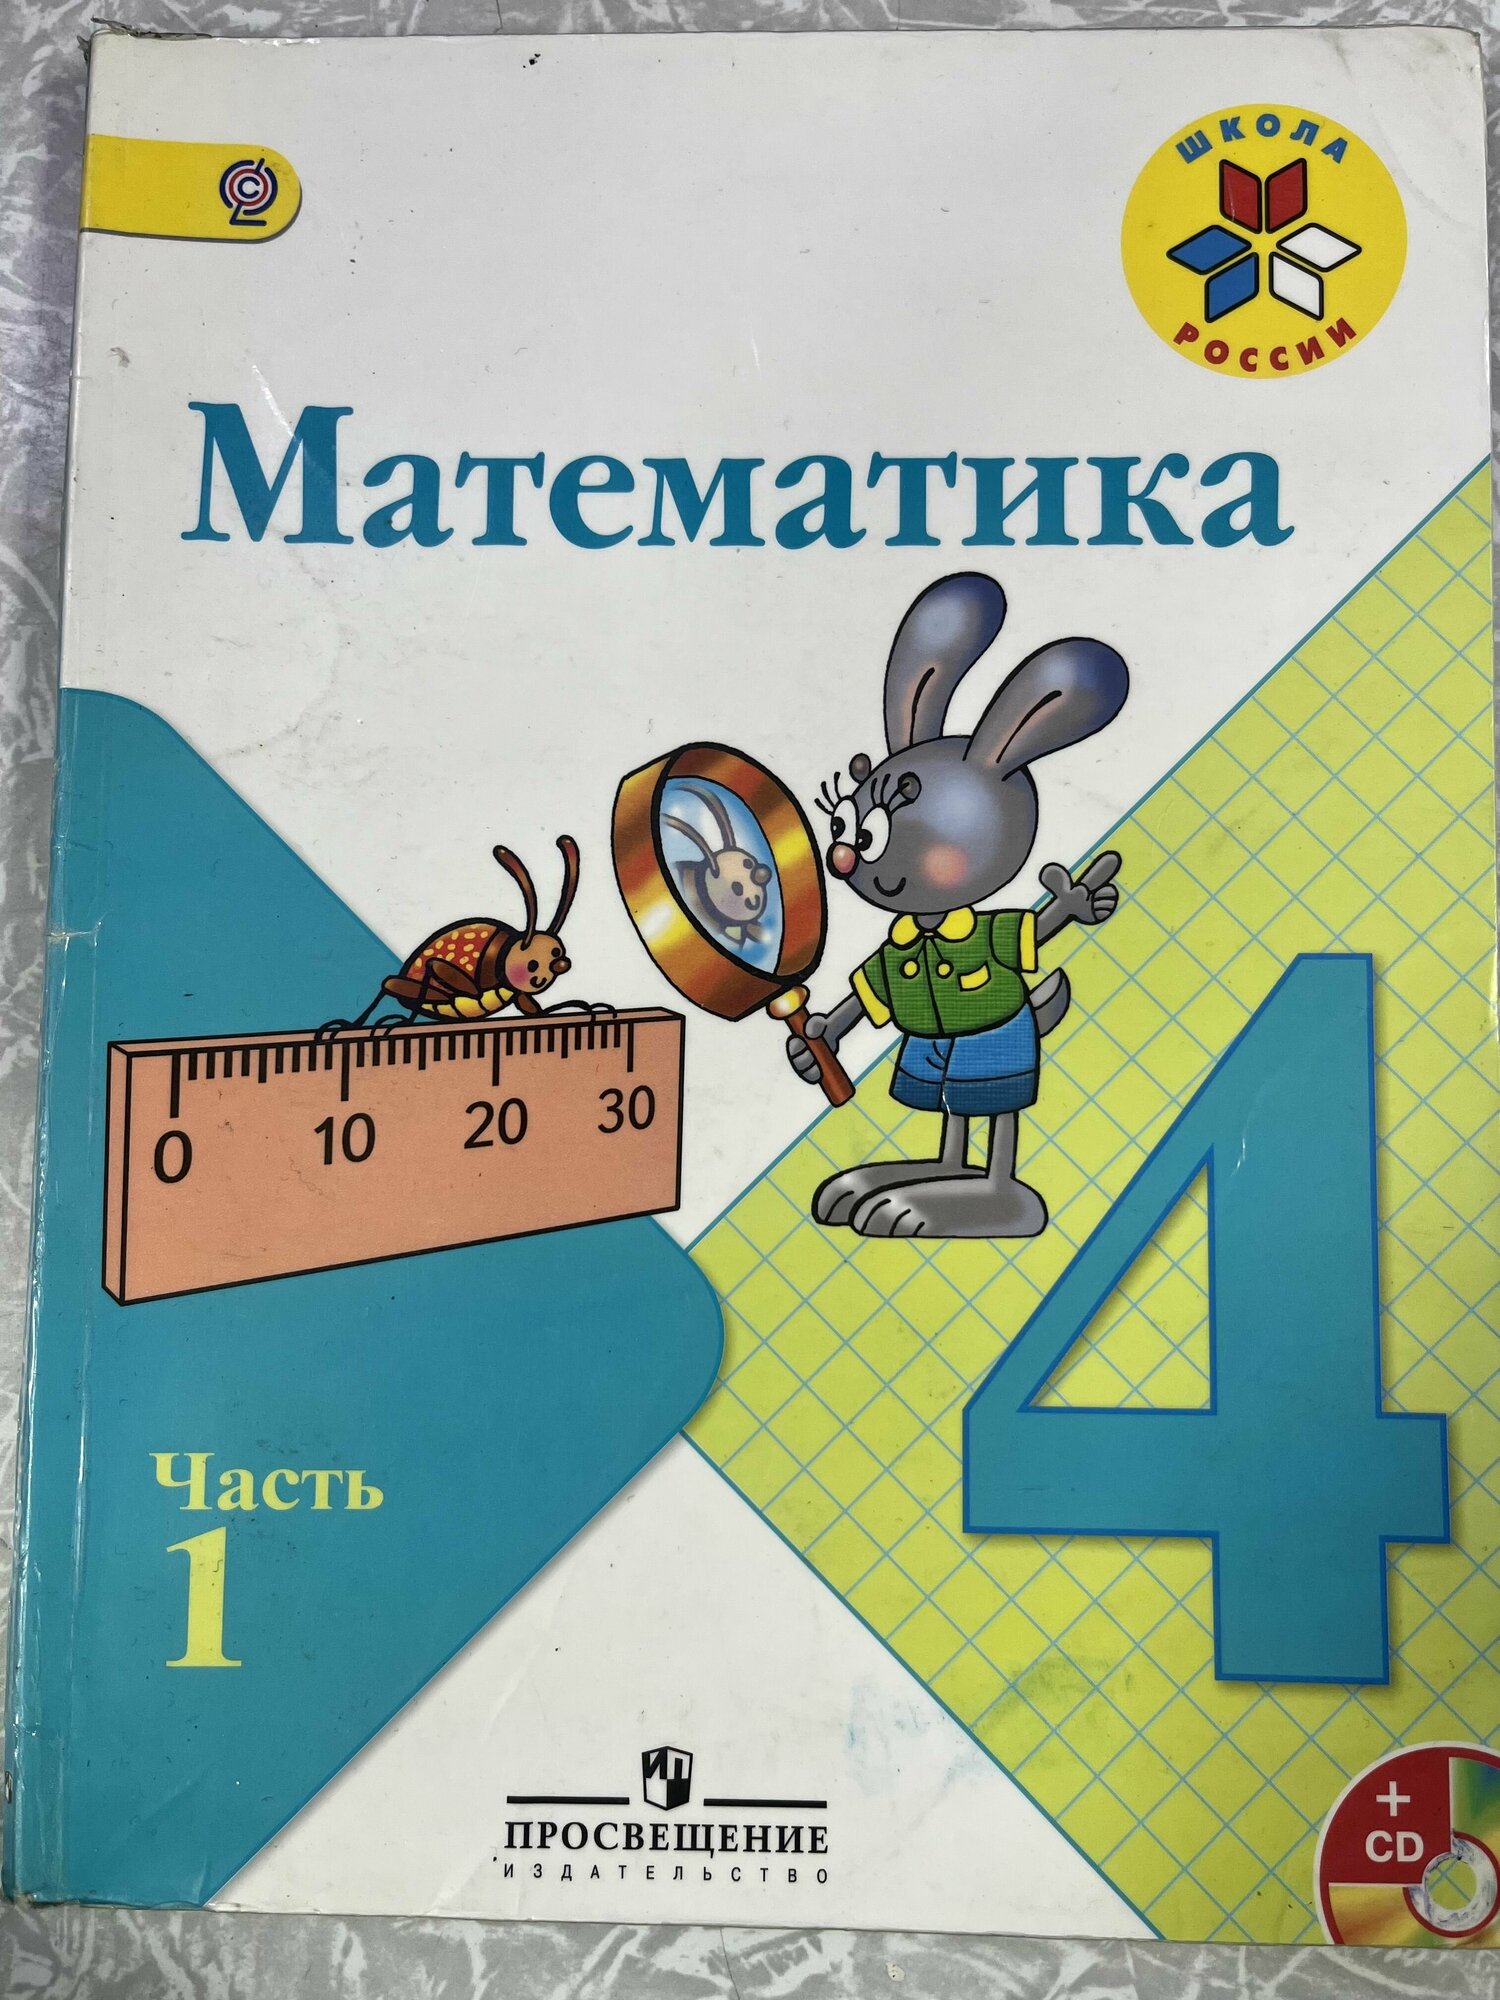 Математика 4 класс Моро Волкова (second hand книга) учебник б у часть 1